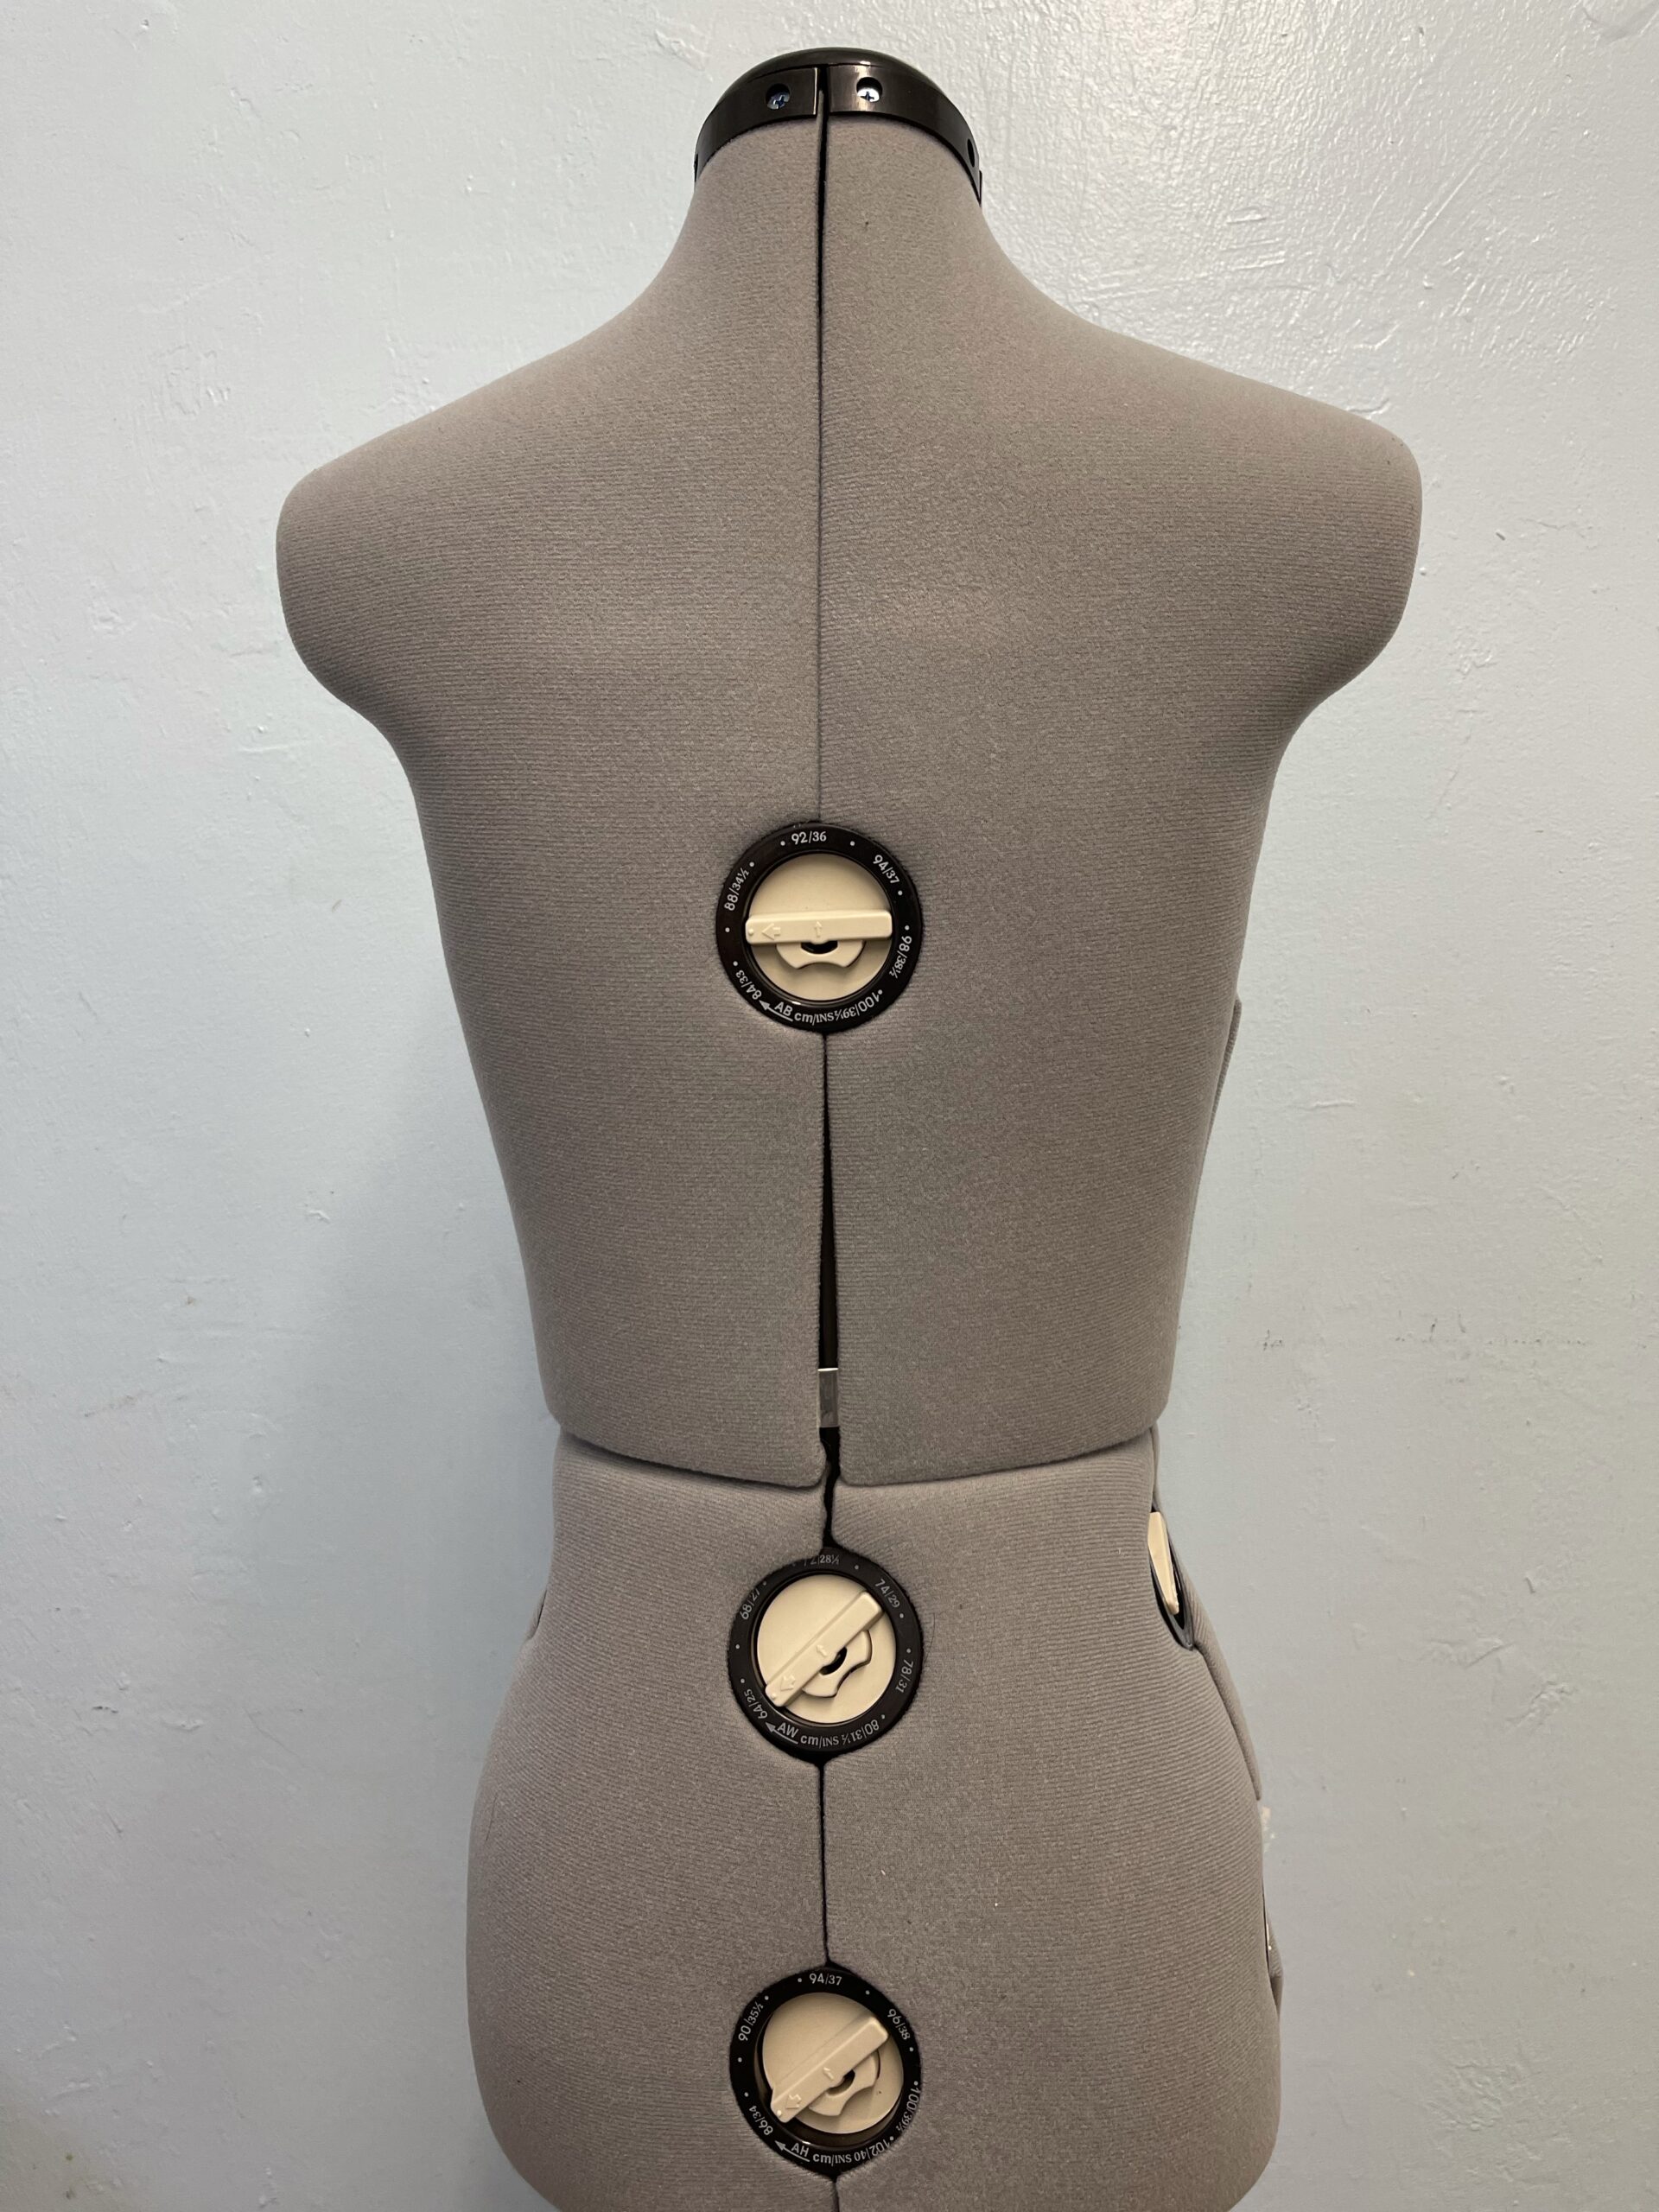 13 Dials Adjustable Dress Female Mannequin